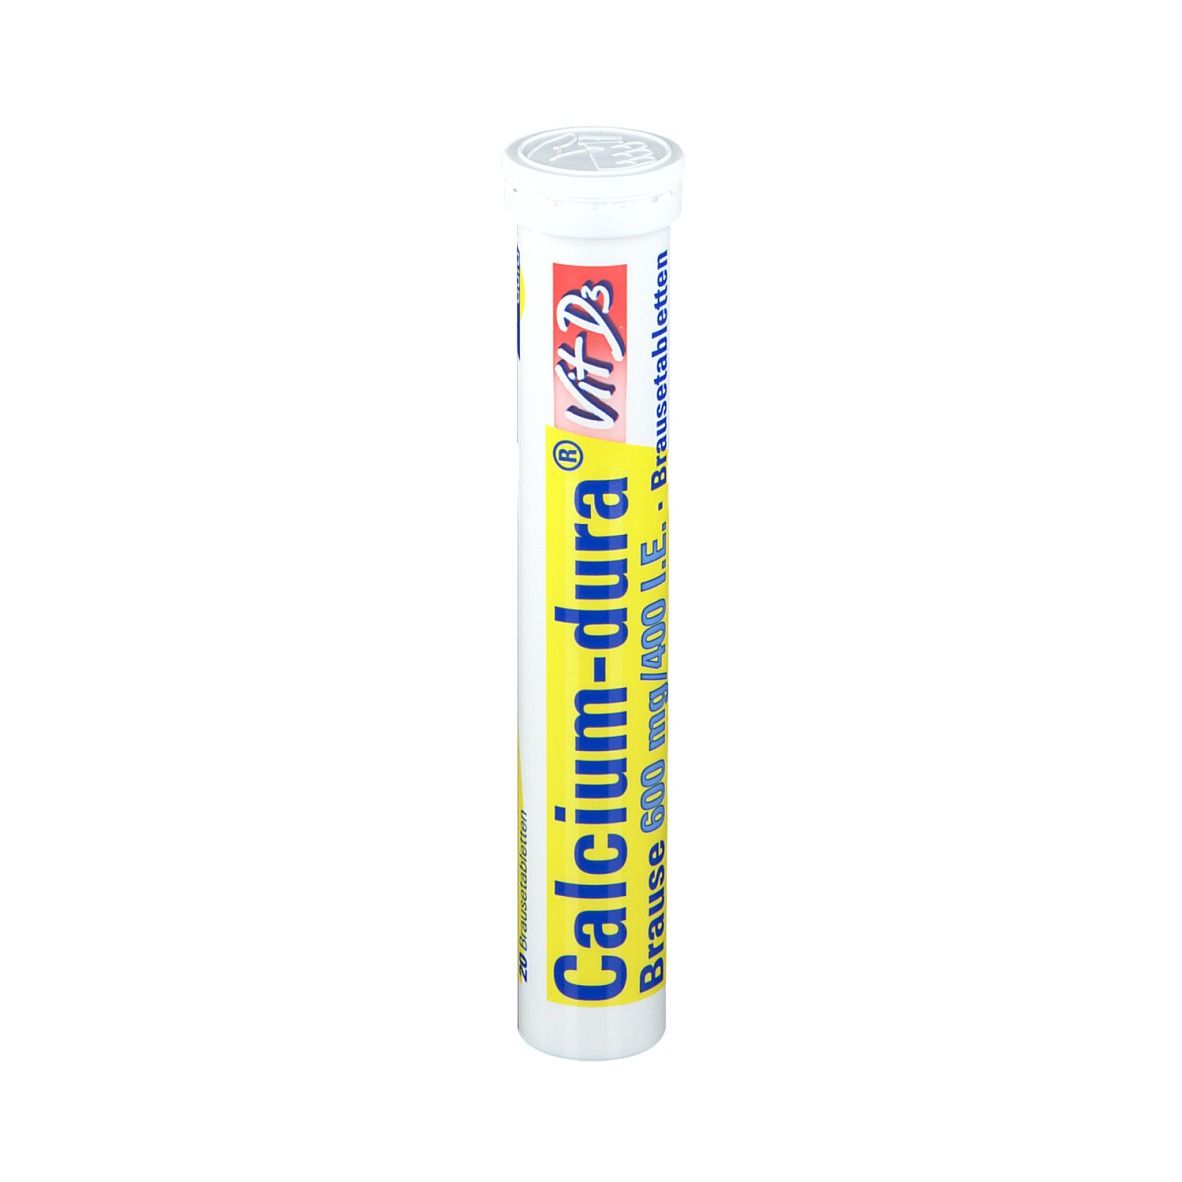 Calcium-dura® Vit. D3 600 mg/ 400 I.e. Brausetabletten